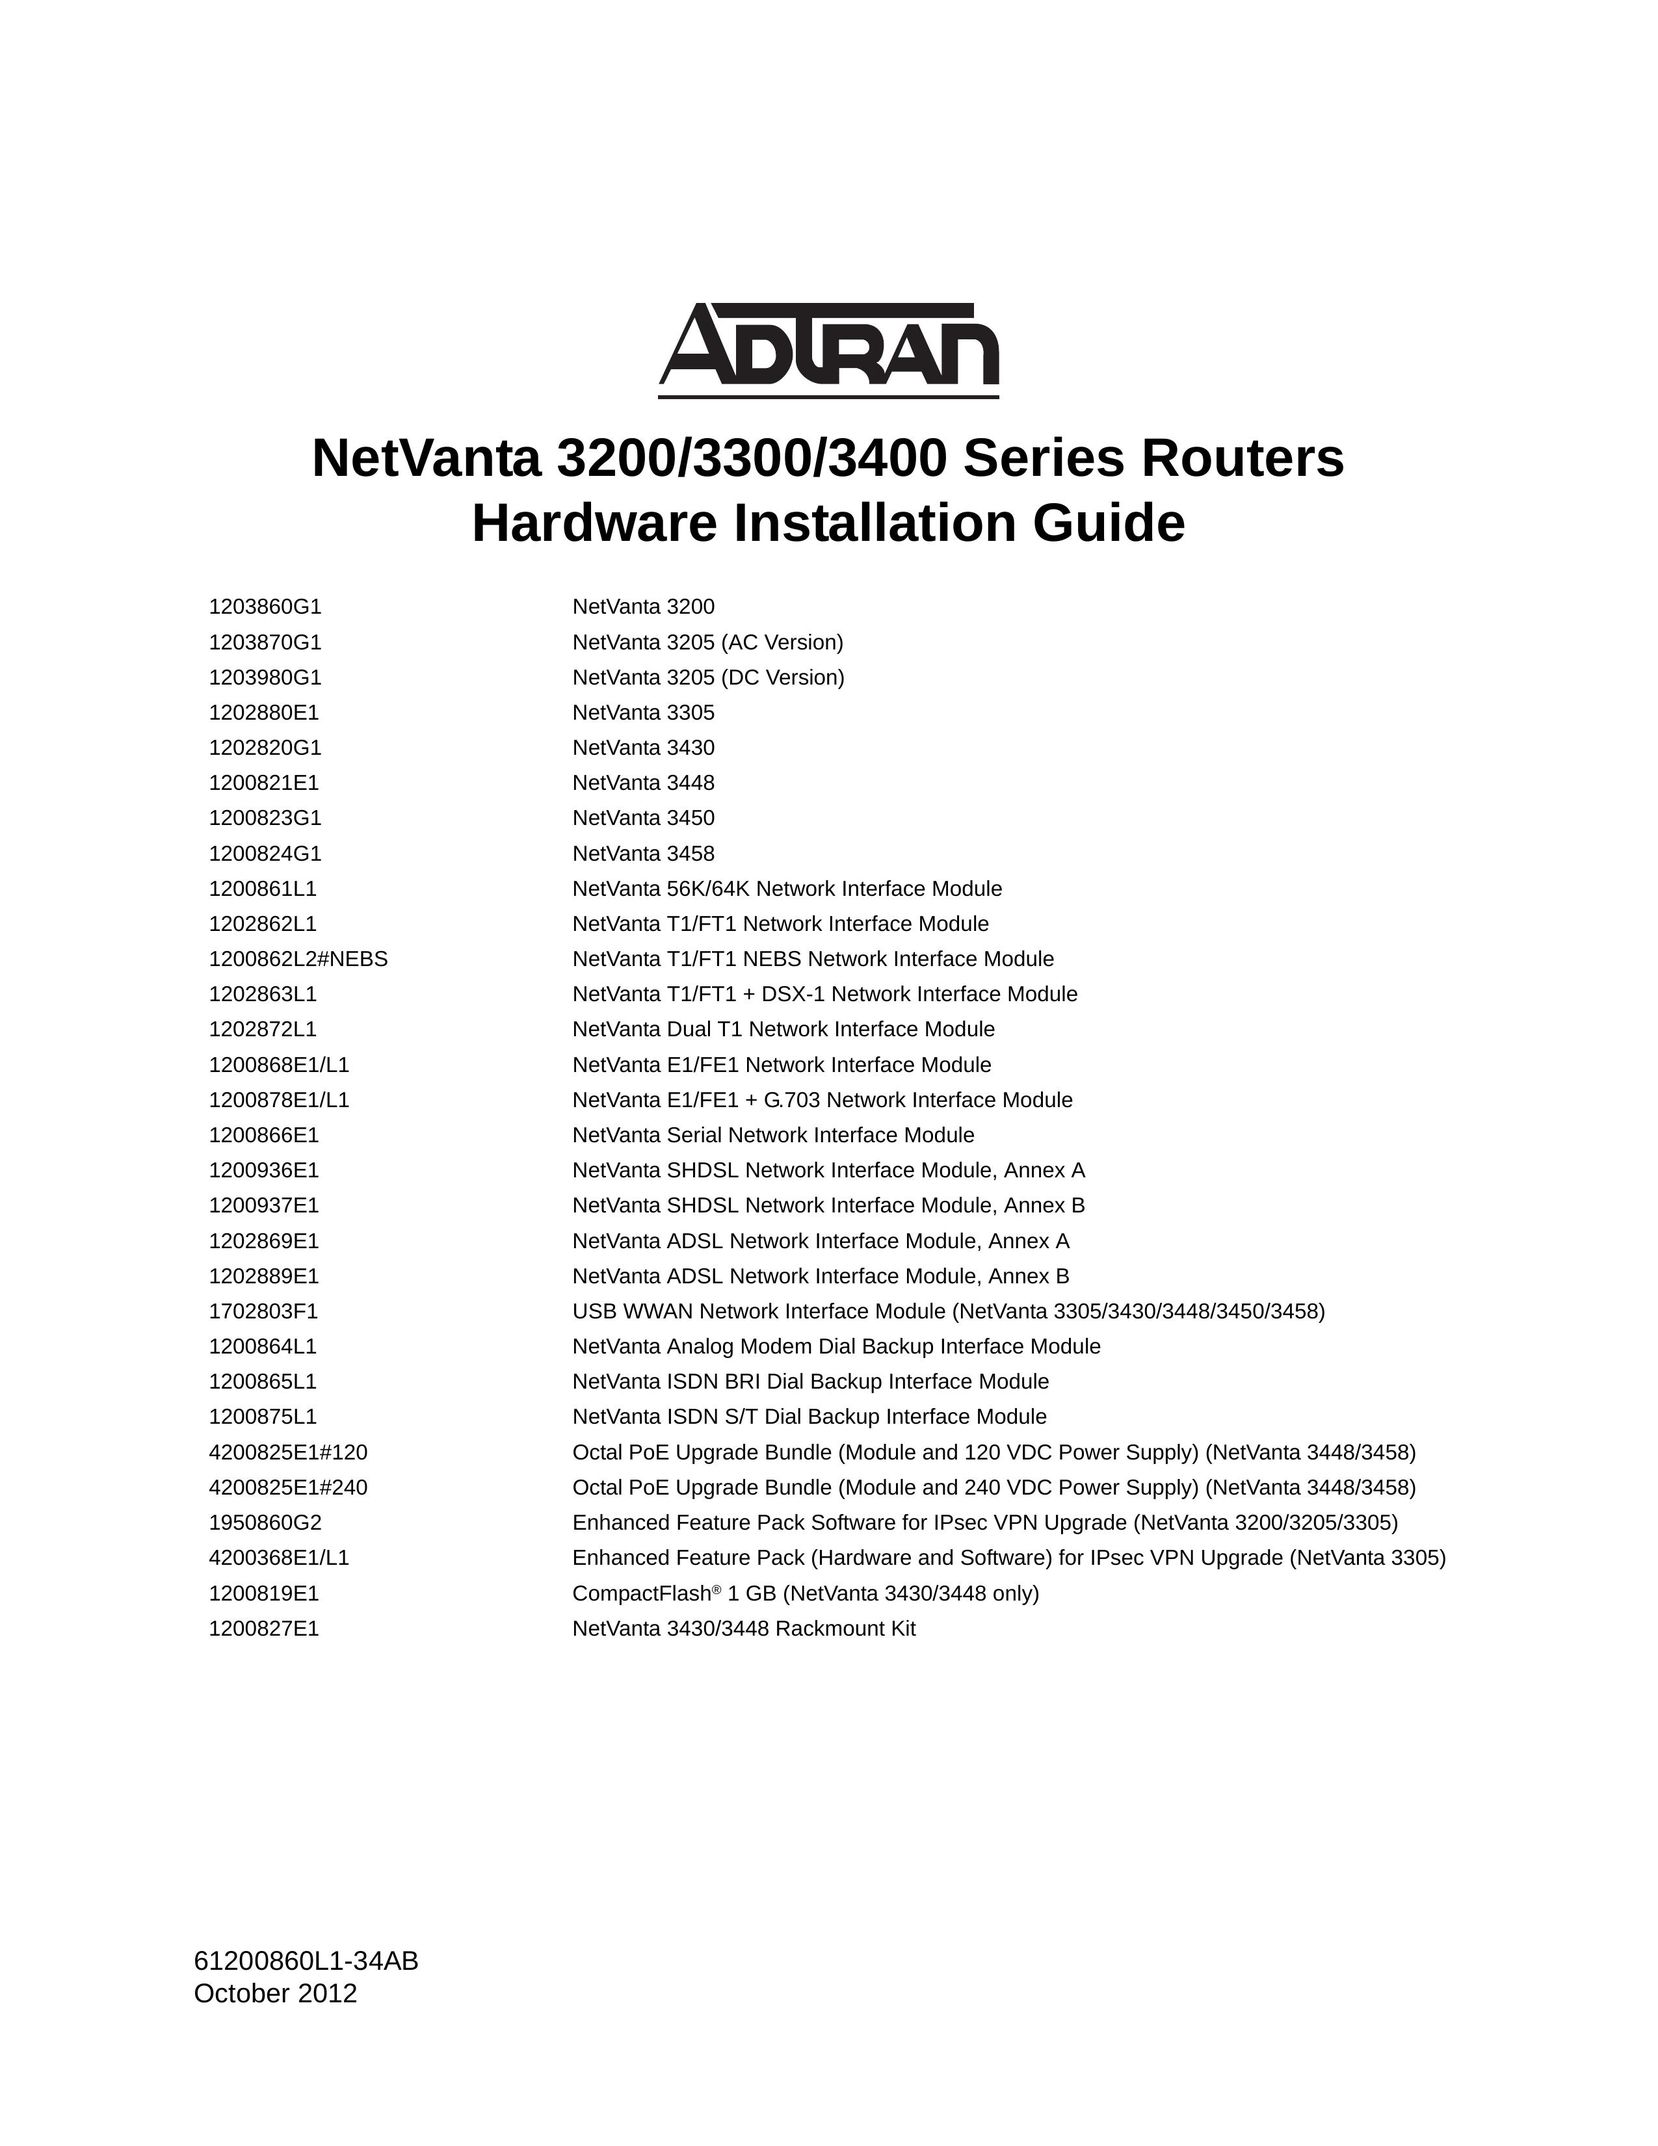 ADTRAN 1200821E1 Network Router User Manual